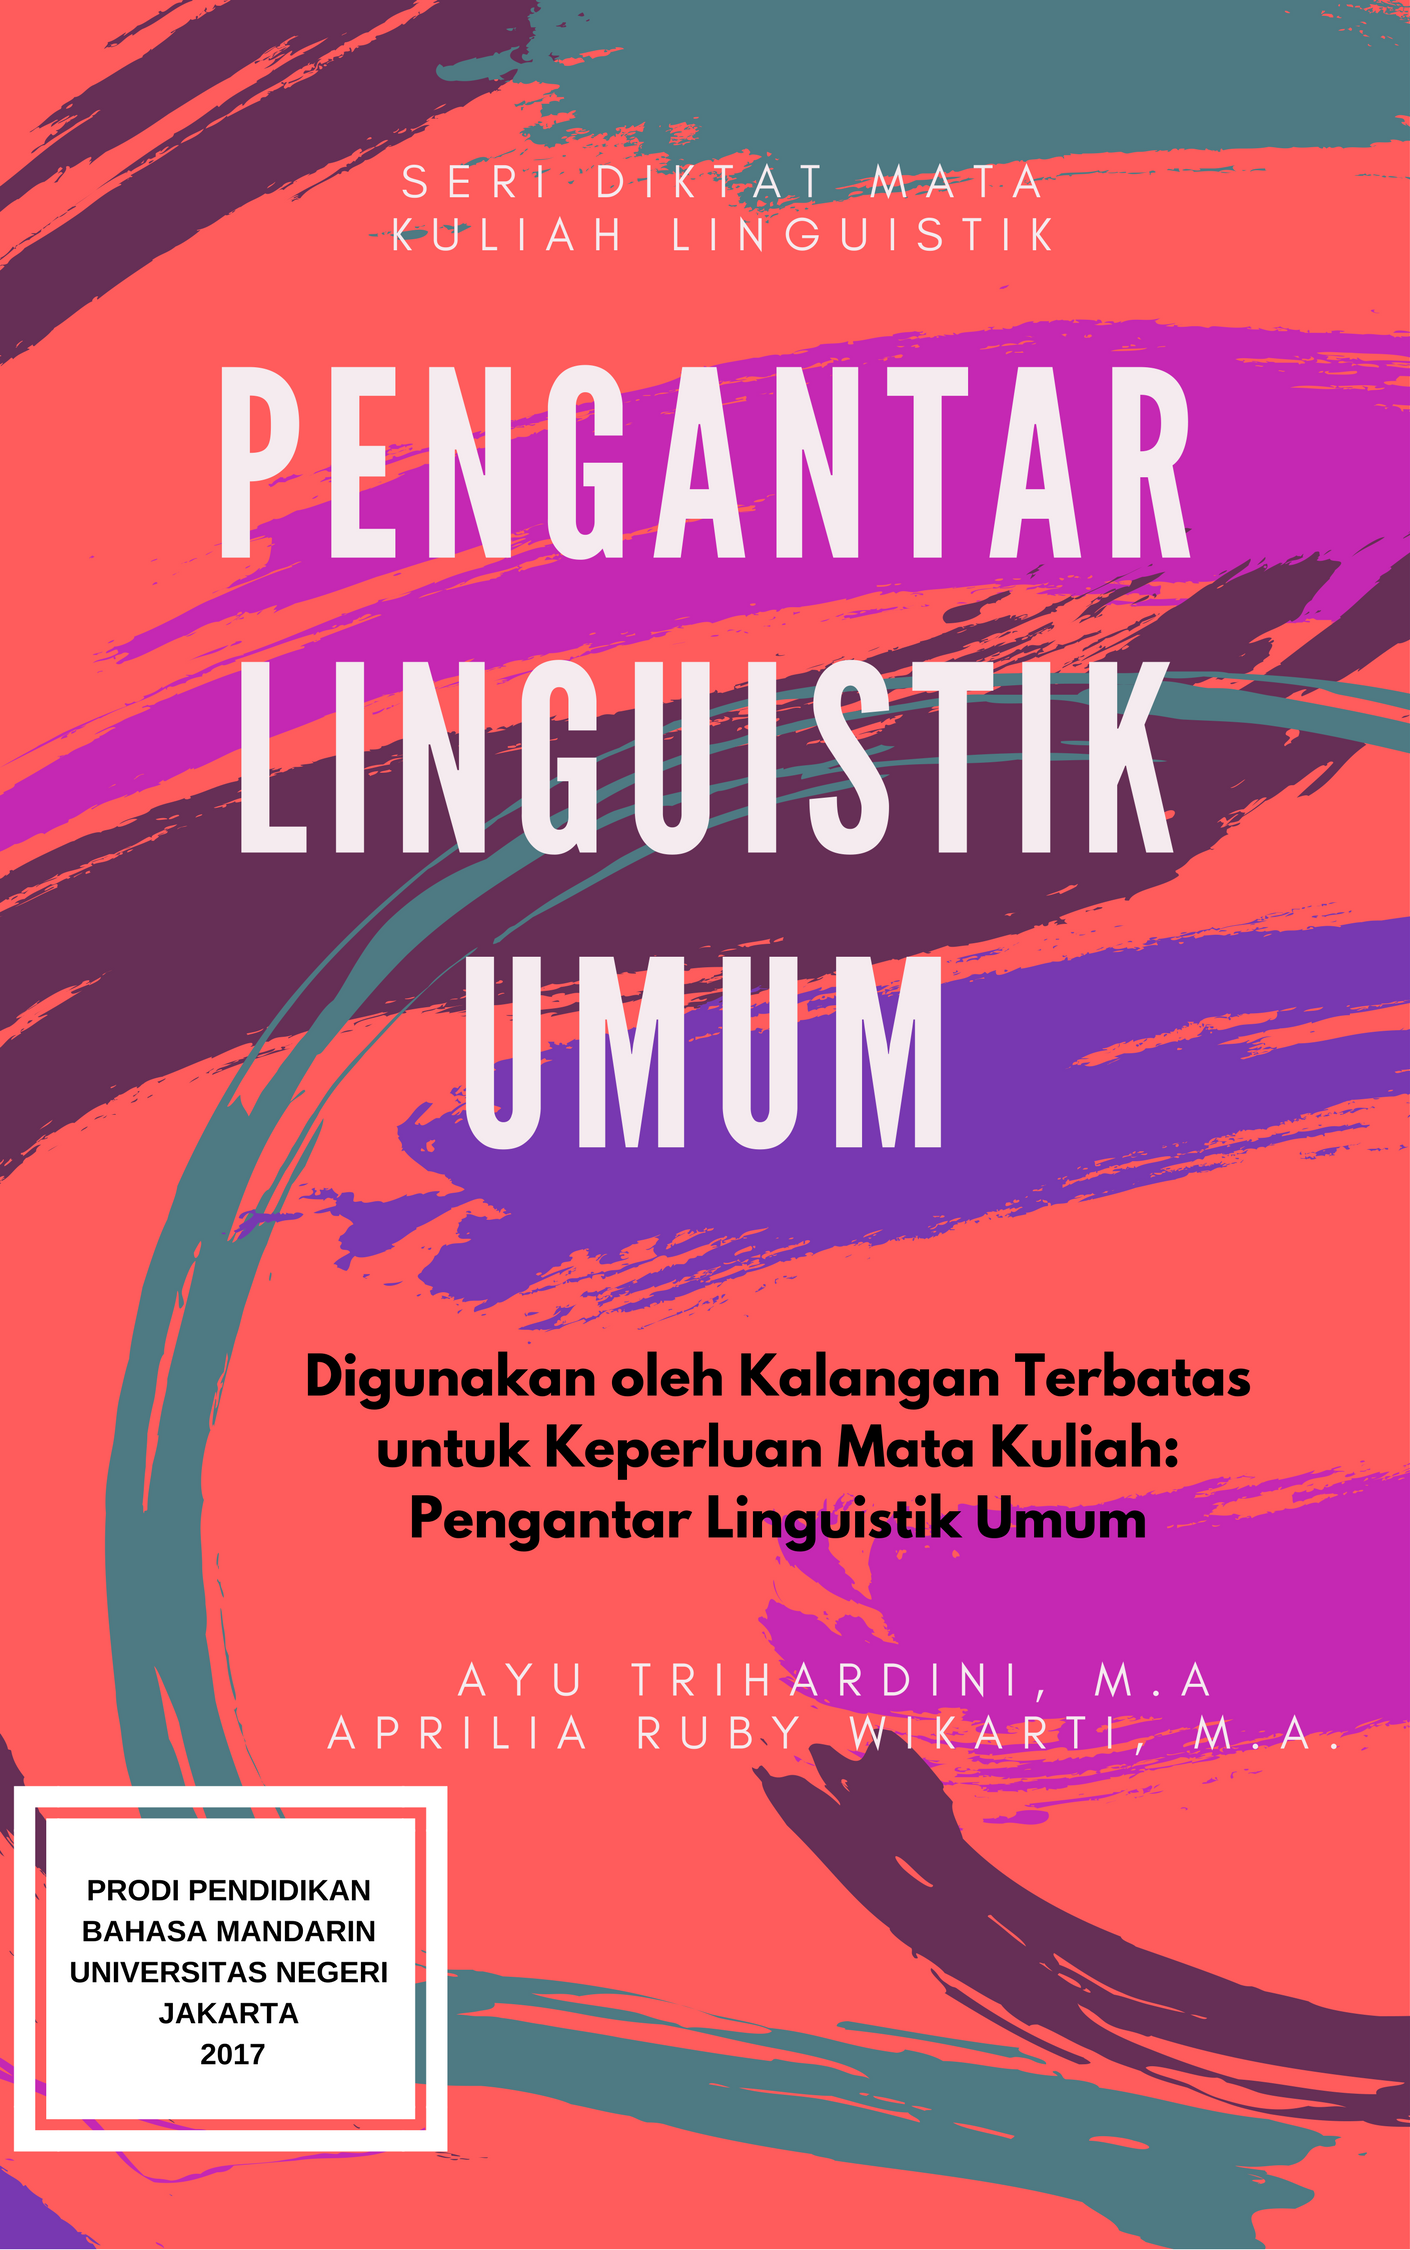 Pengantar Linguistik Umum (Ayu Trihardini, M.A. / Aprilia Ruby Wikarti, M.A.)